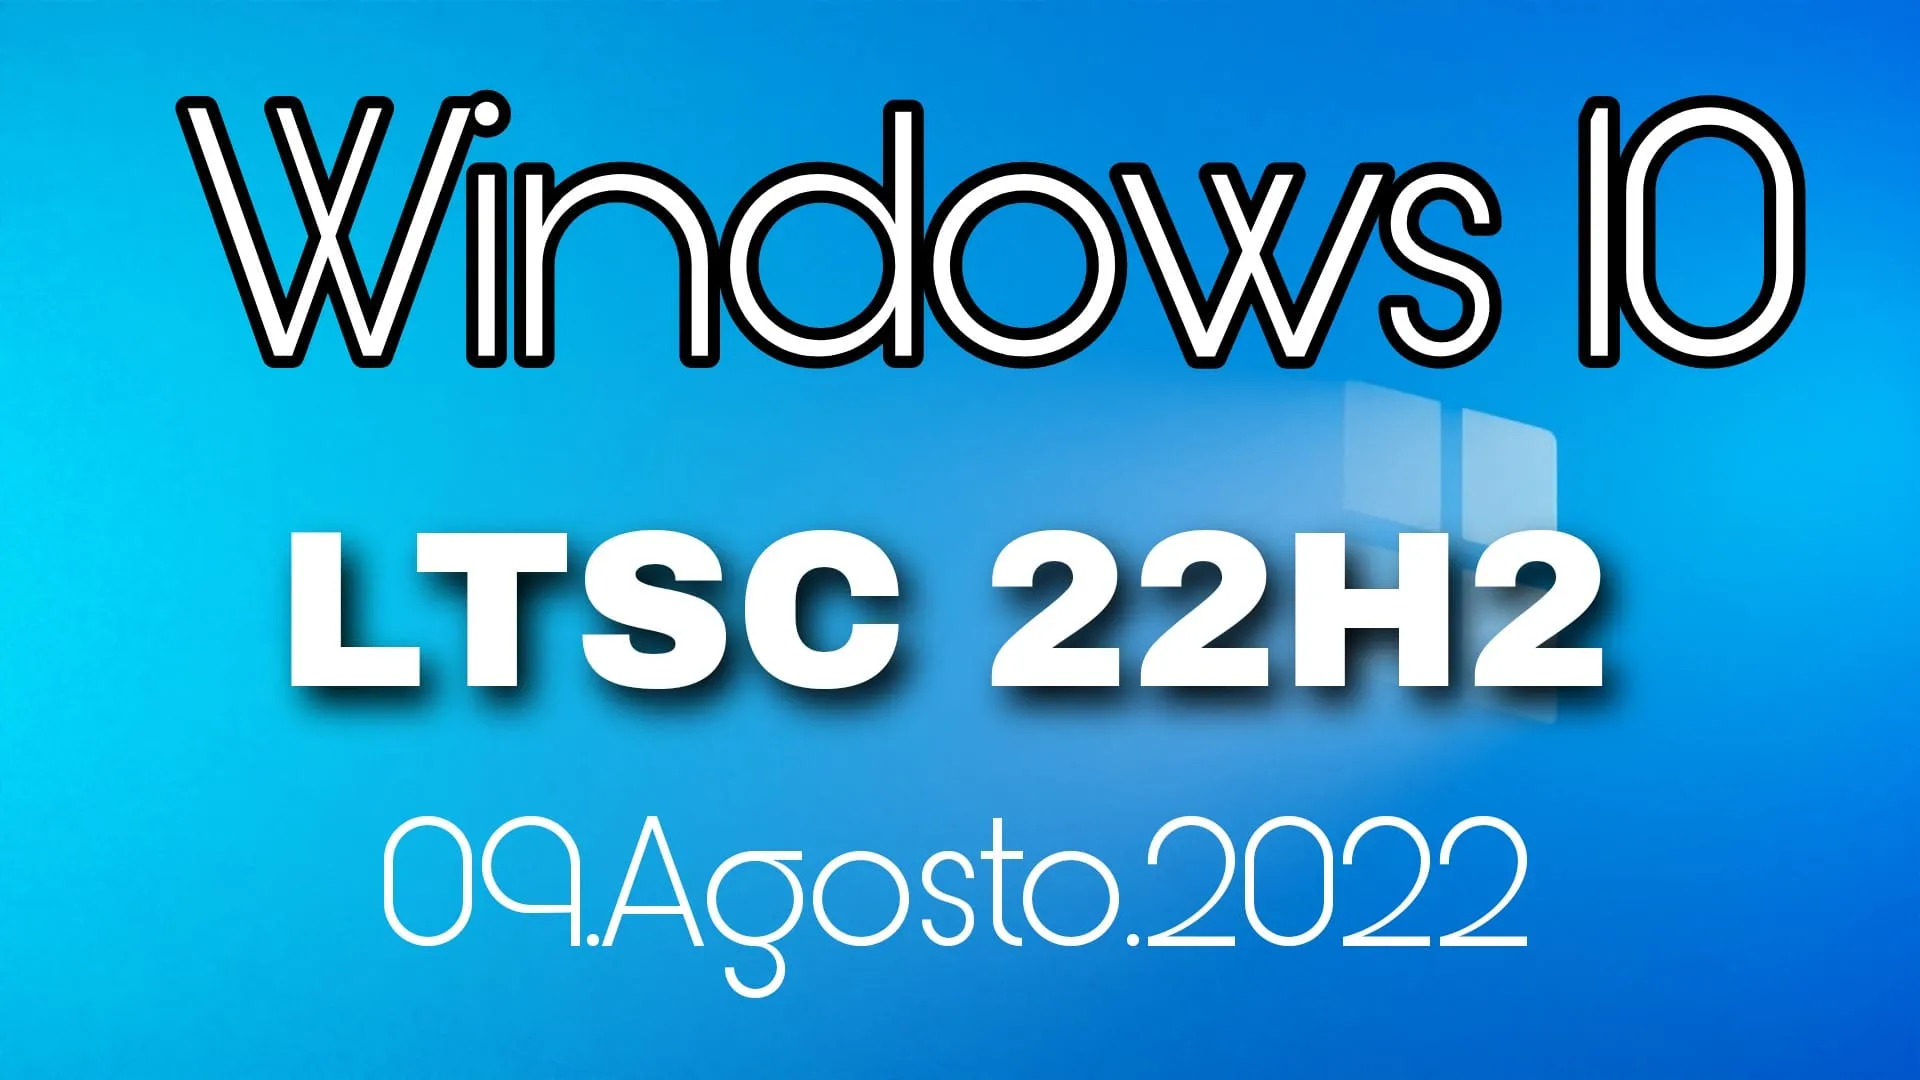 WINDOWS 10 LTSC 2022